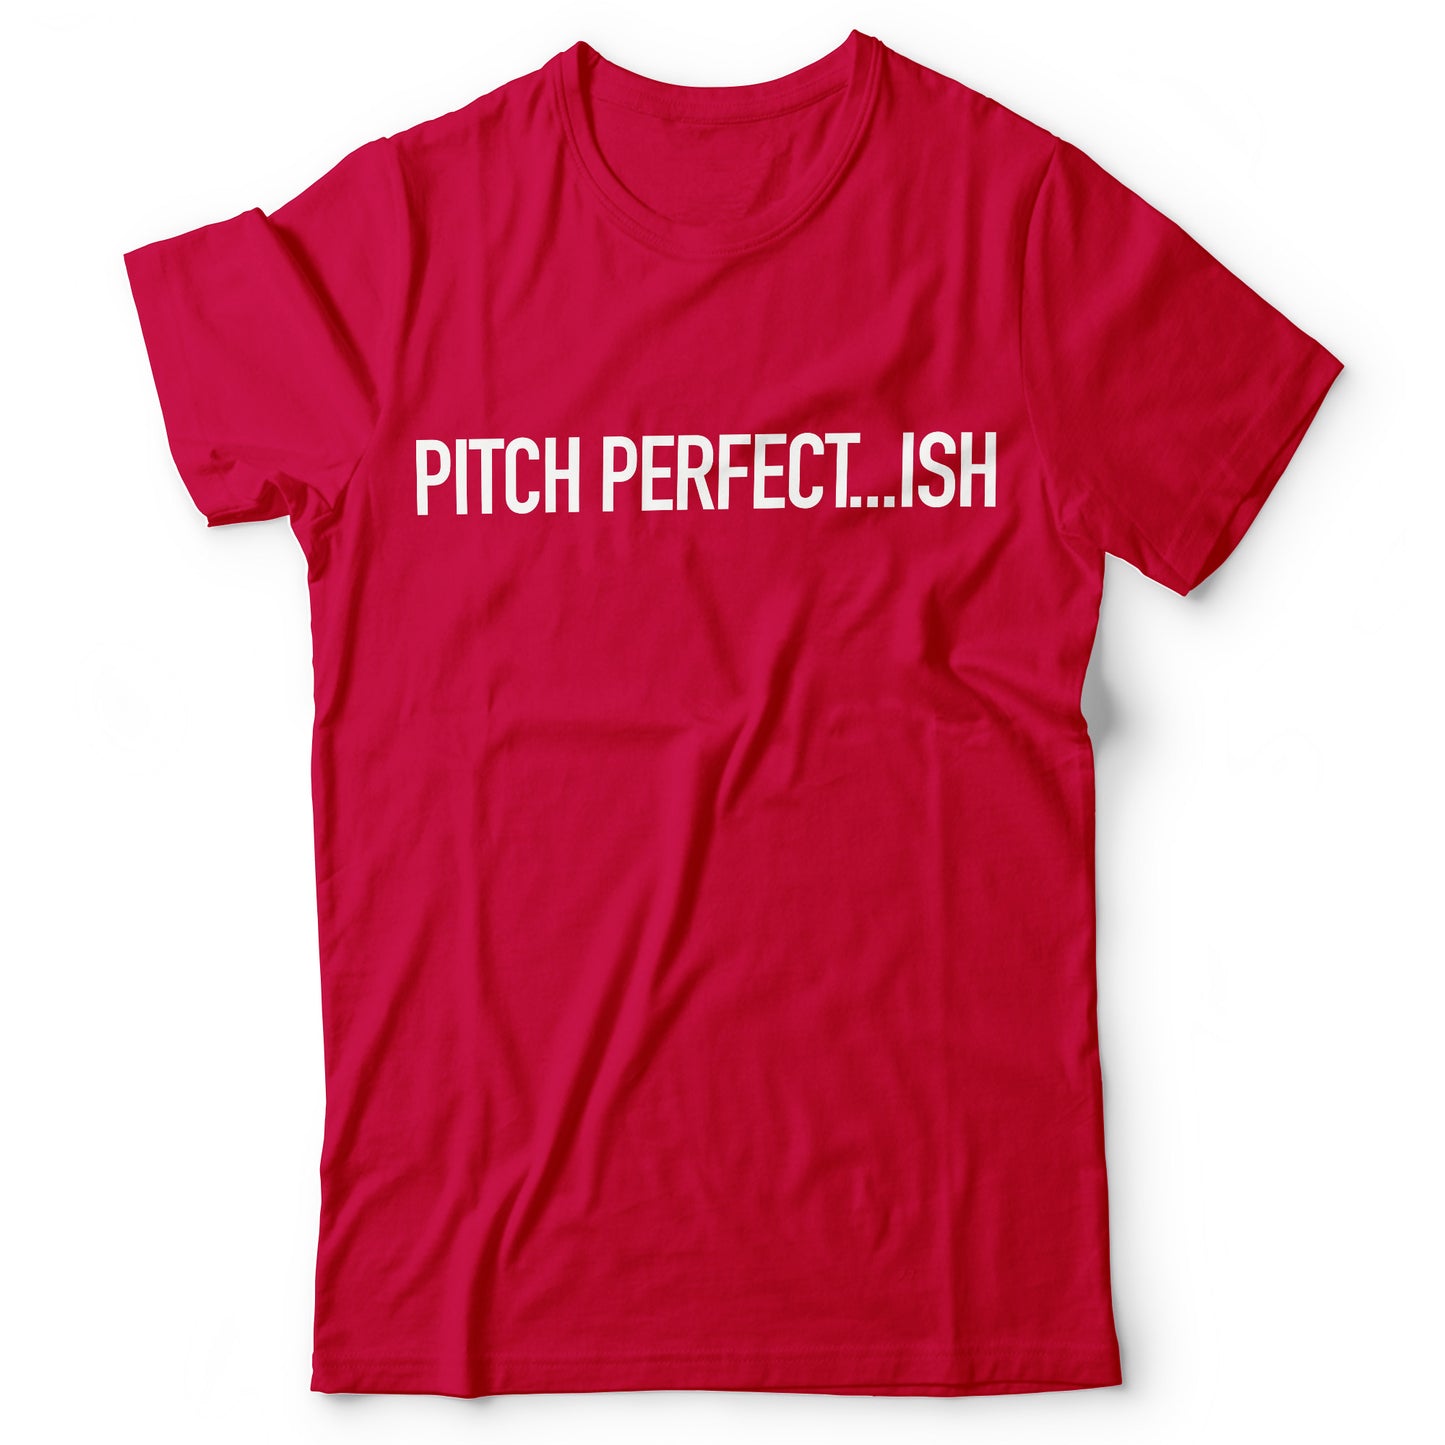 Pitch Perfect...ish - T-shirt